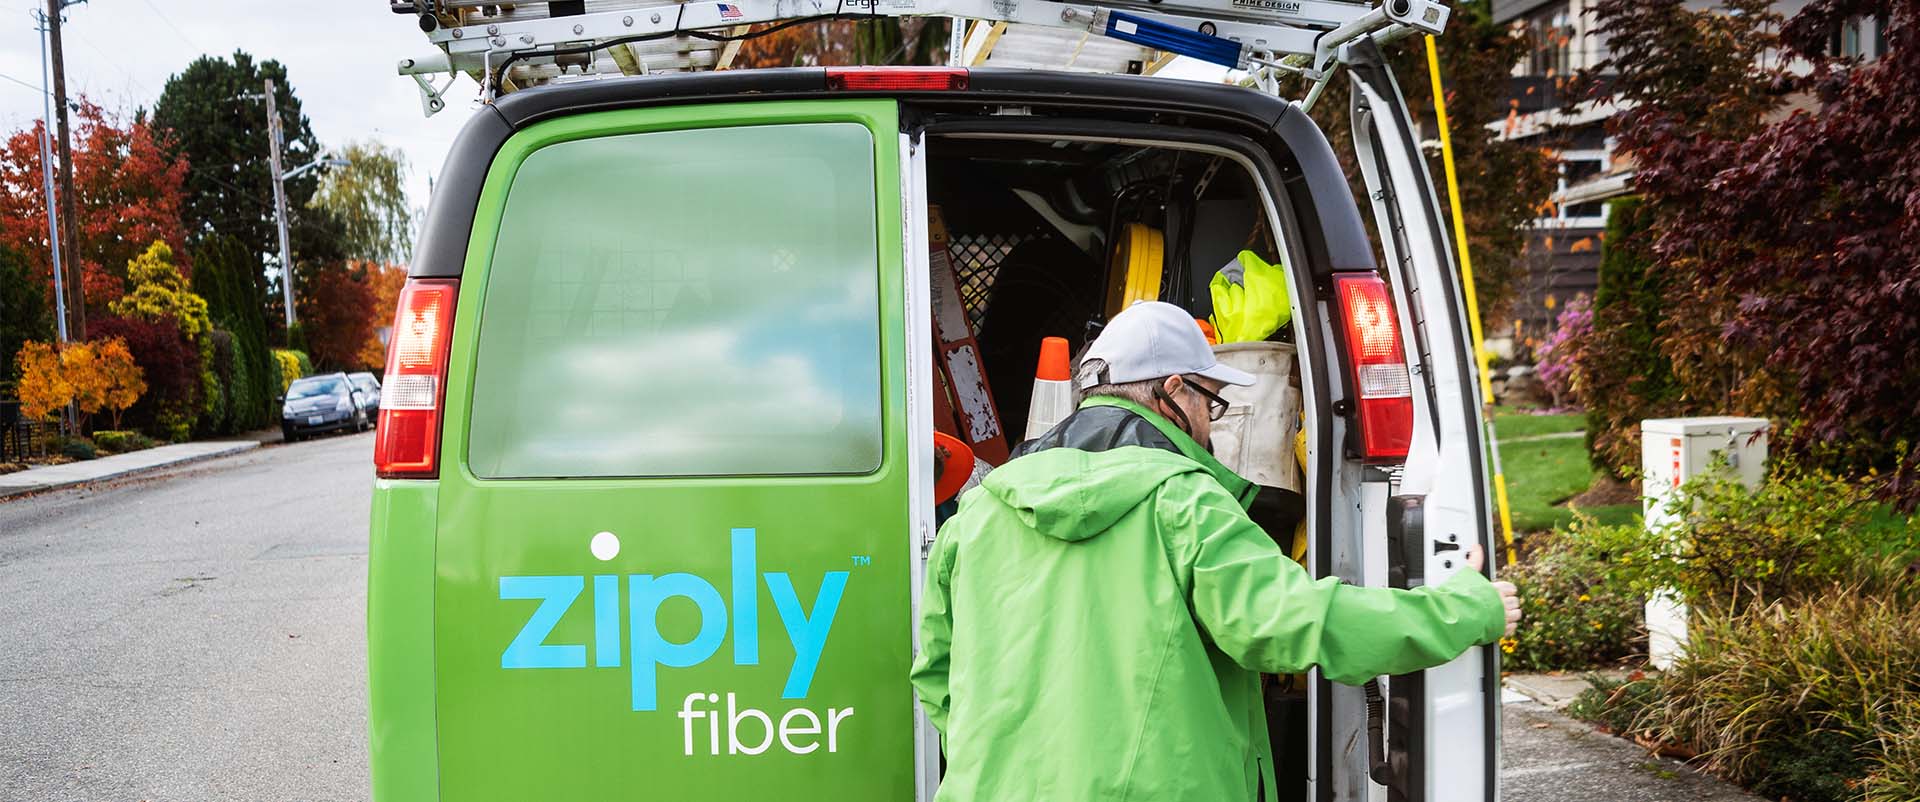 Ziply Fiber field tech opens a construction van full of equipment for installing fiberoptic internet. 